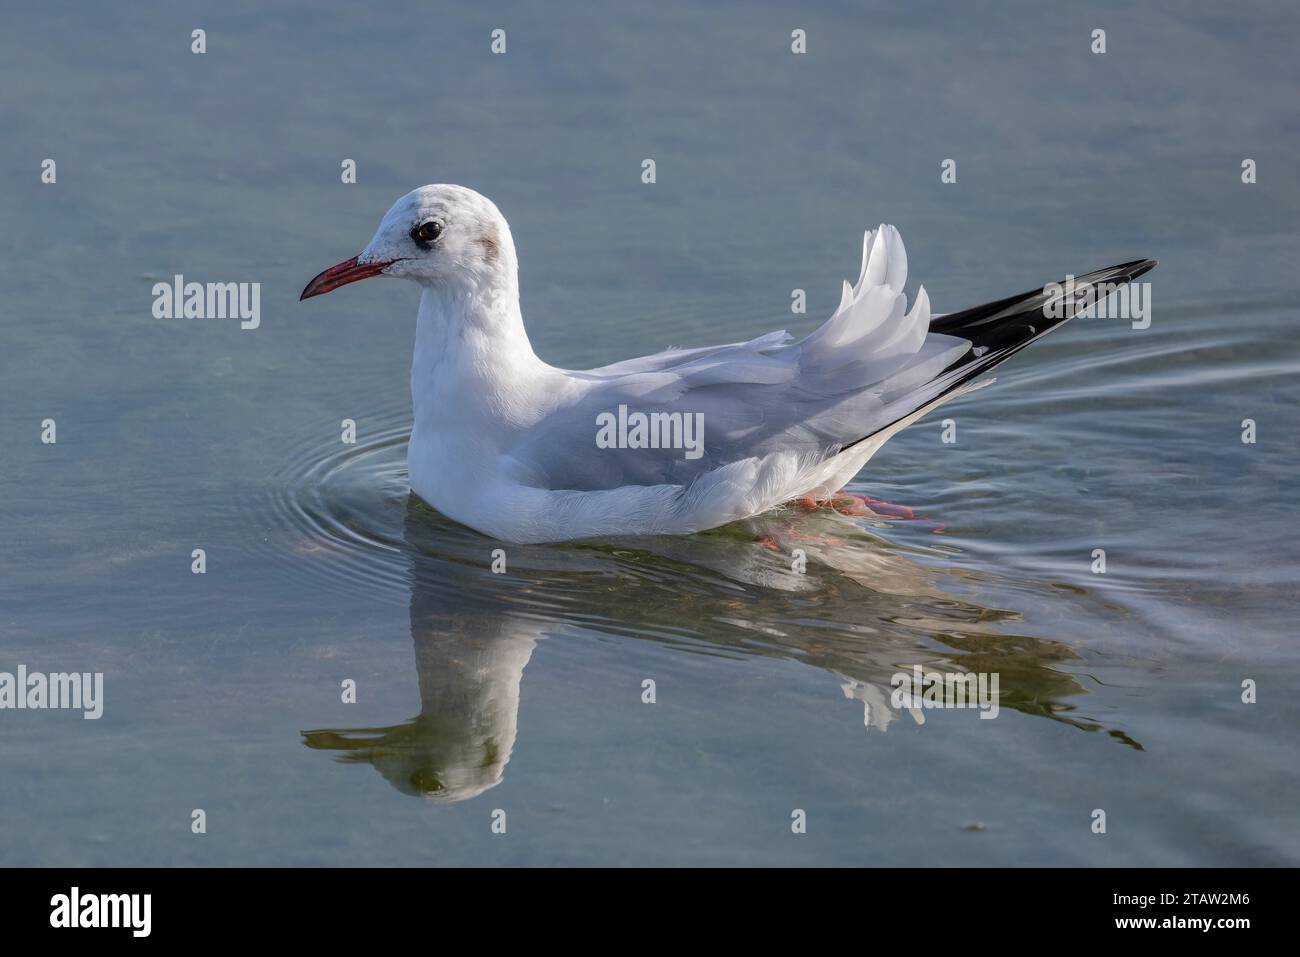 Black-headed gull, Chroicocephalus ridibundus swimming in lake, with reflection. Stock Photo